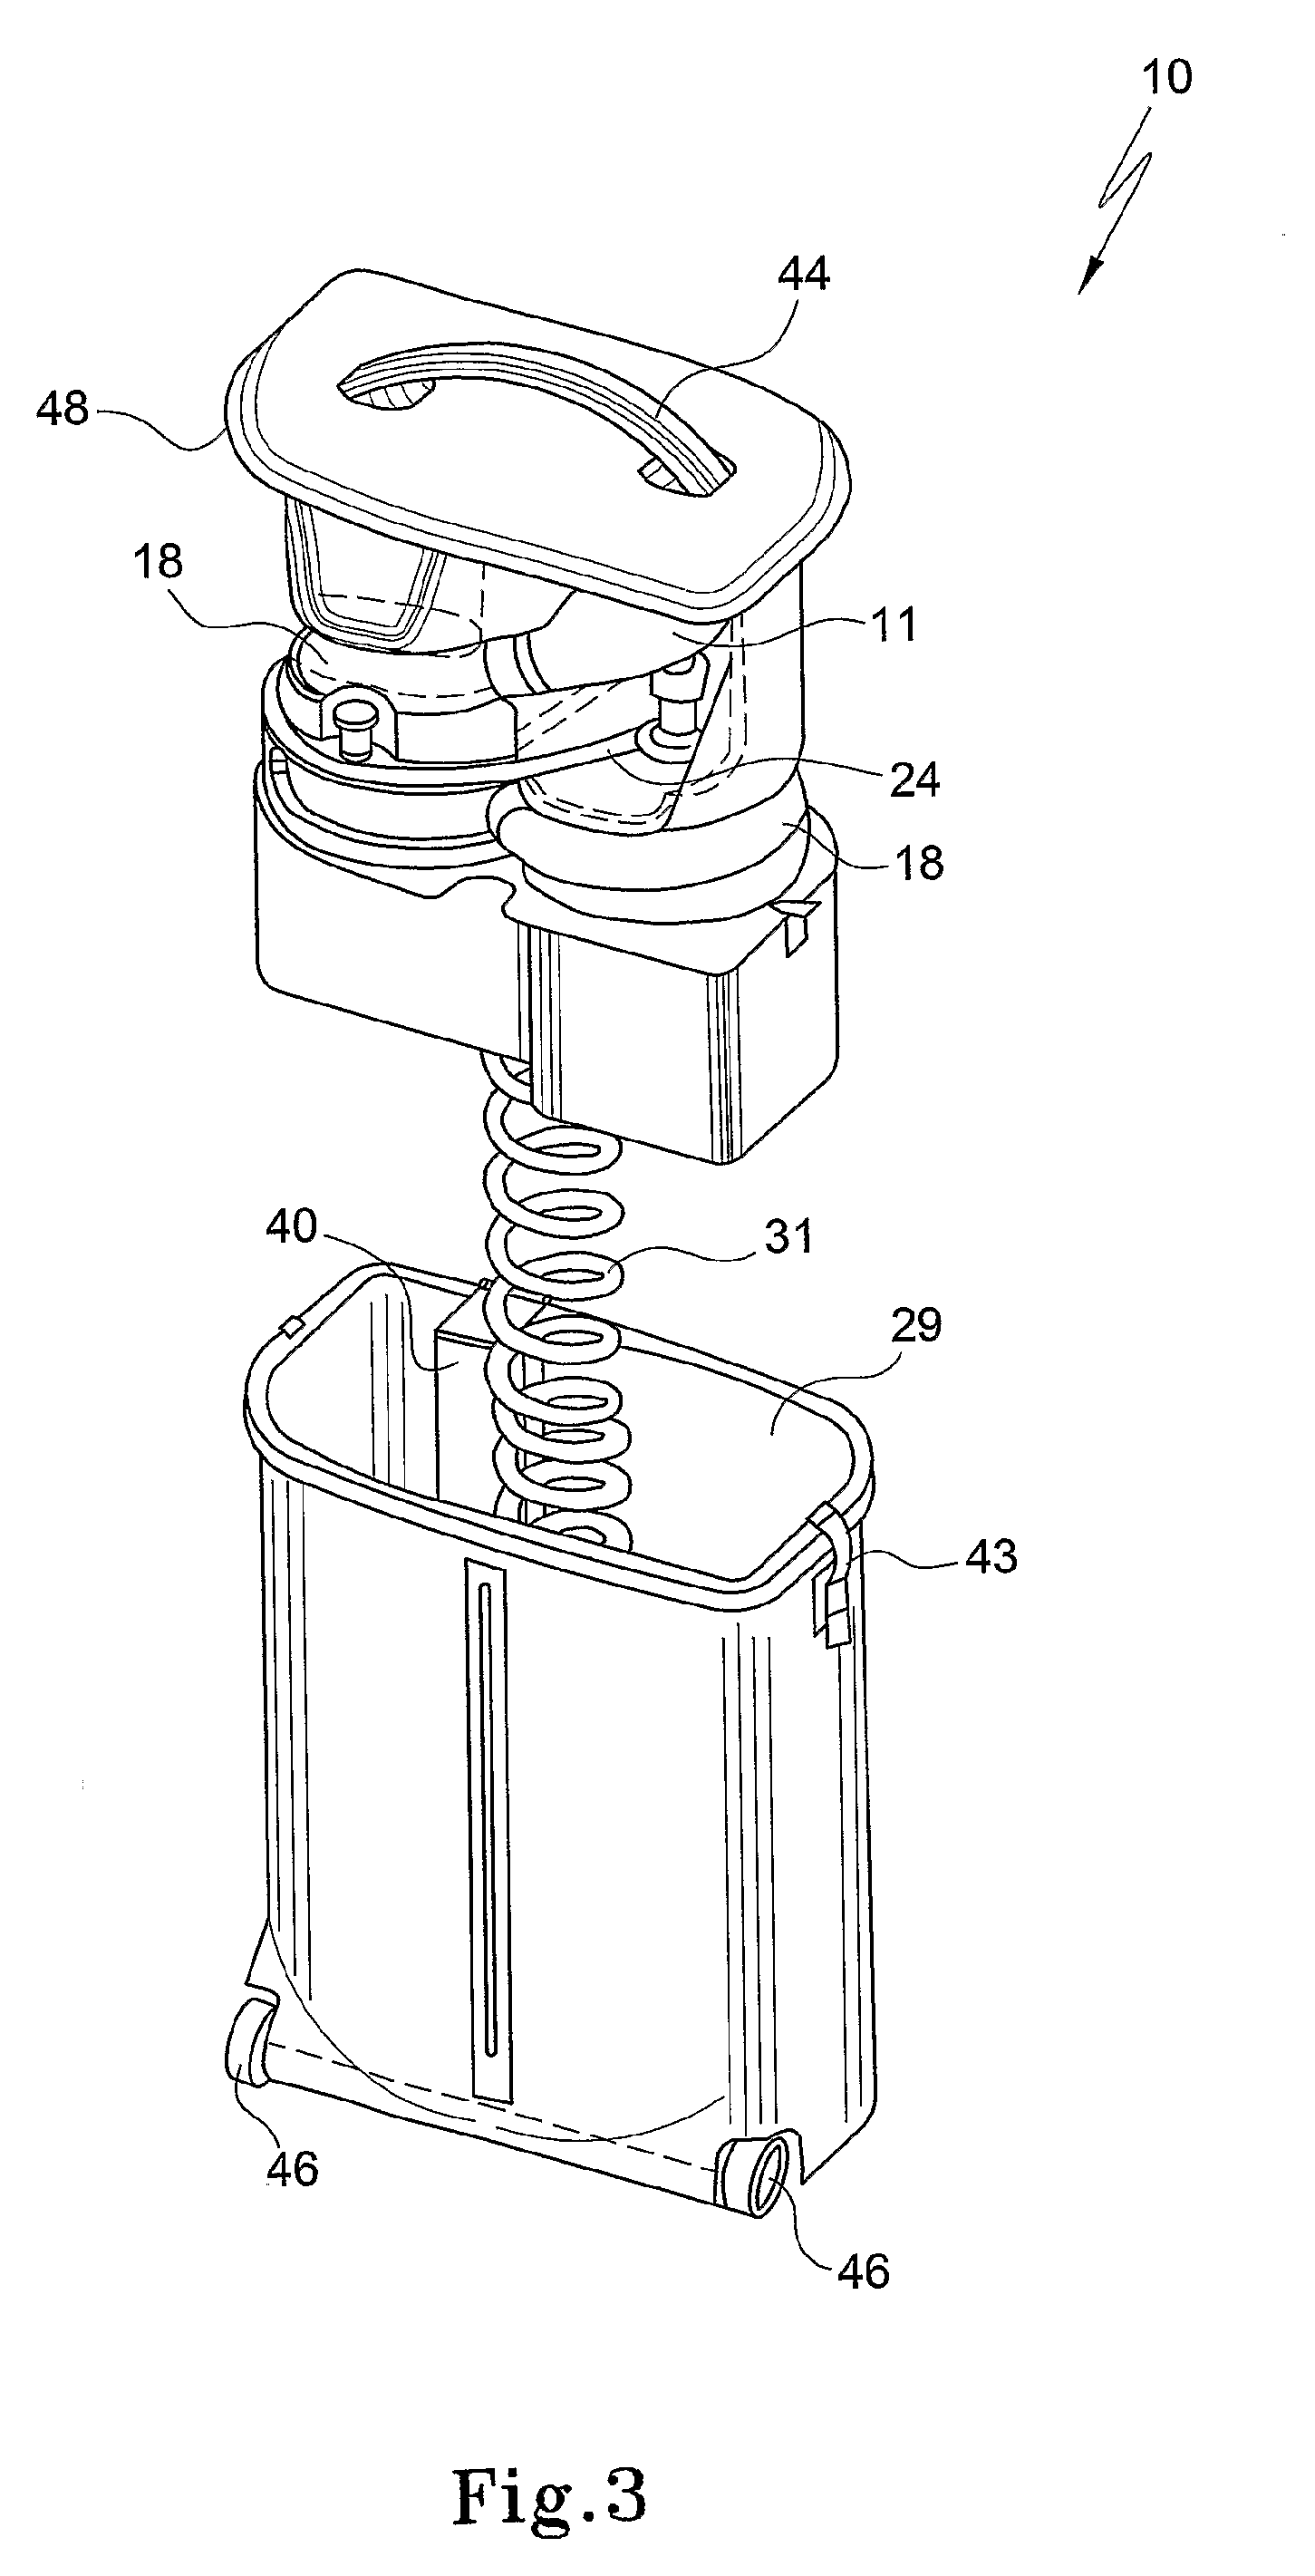 Colostomy Pump System